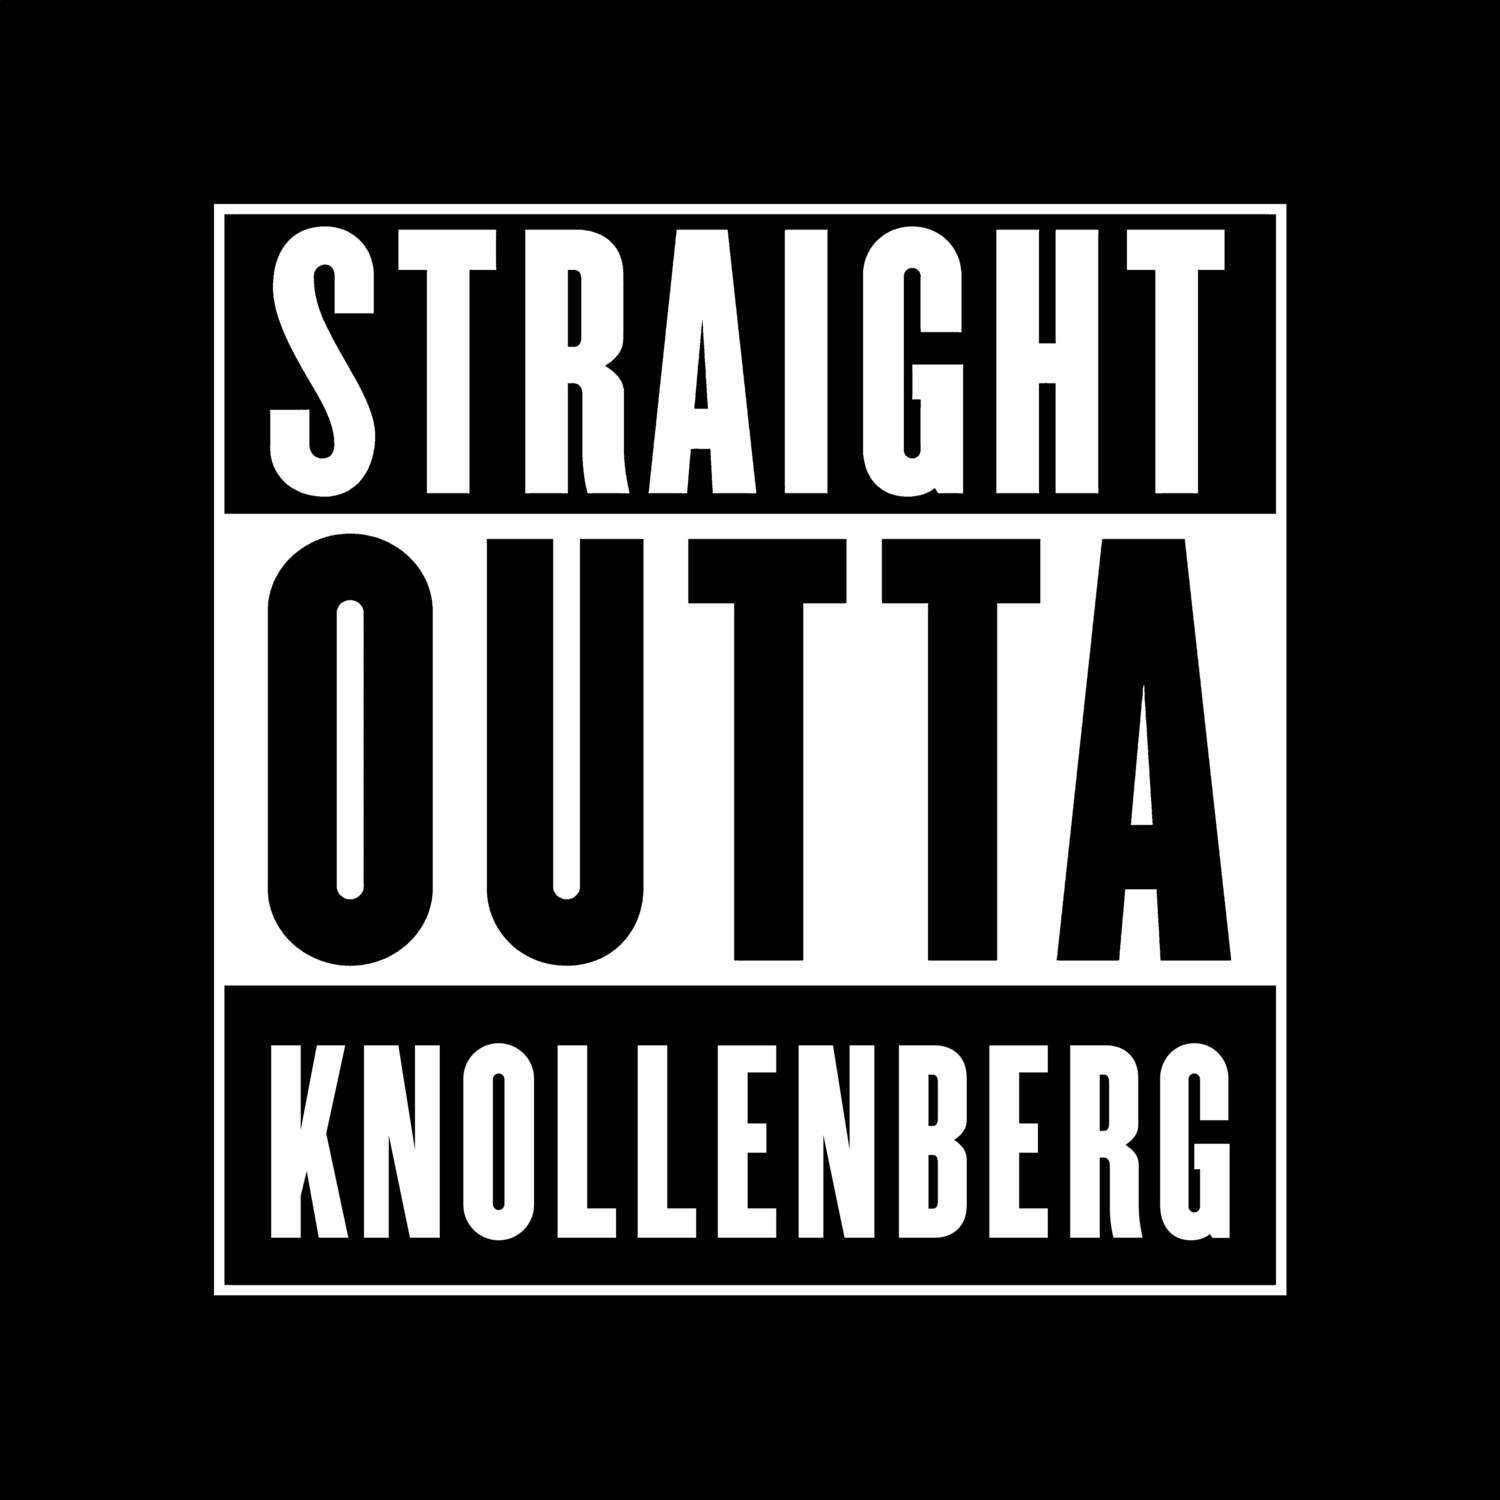 Knollenberg T-Shirt »Straight Outta«